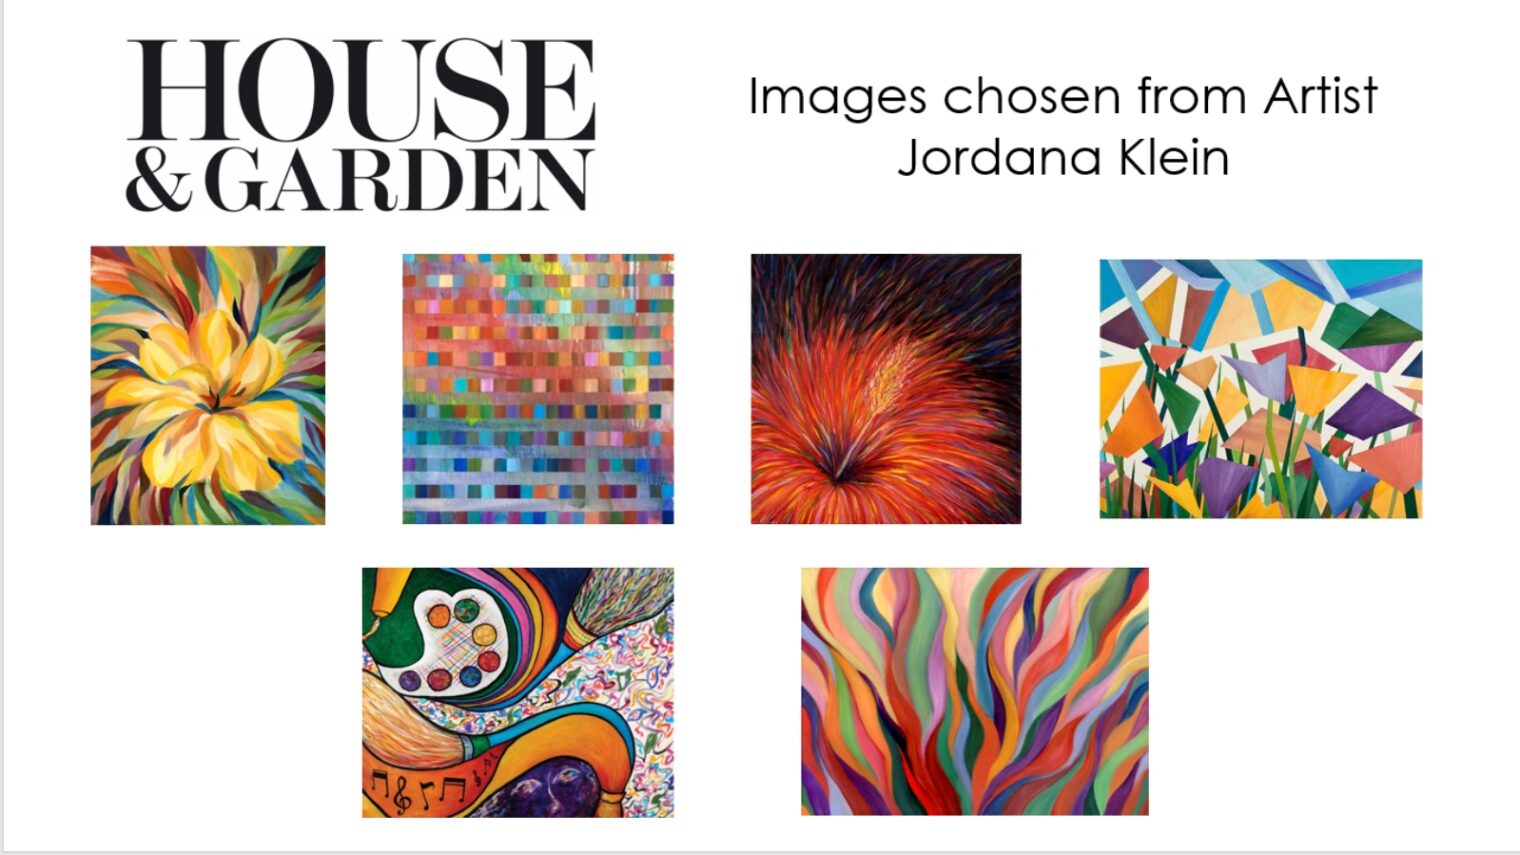 Paintings by Jordana Klein chosen by House & Garden include, clockwise from top left: Yellow Flower, Noah’s Rainbow, Red Flower, Playful Field of Flowers, Burning Bush, Self-Portrait.